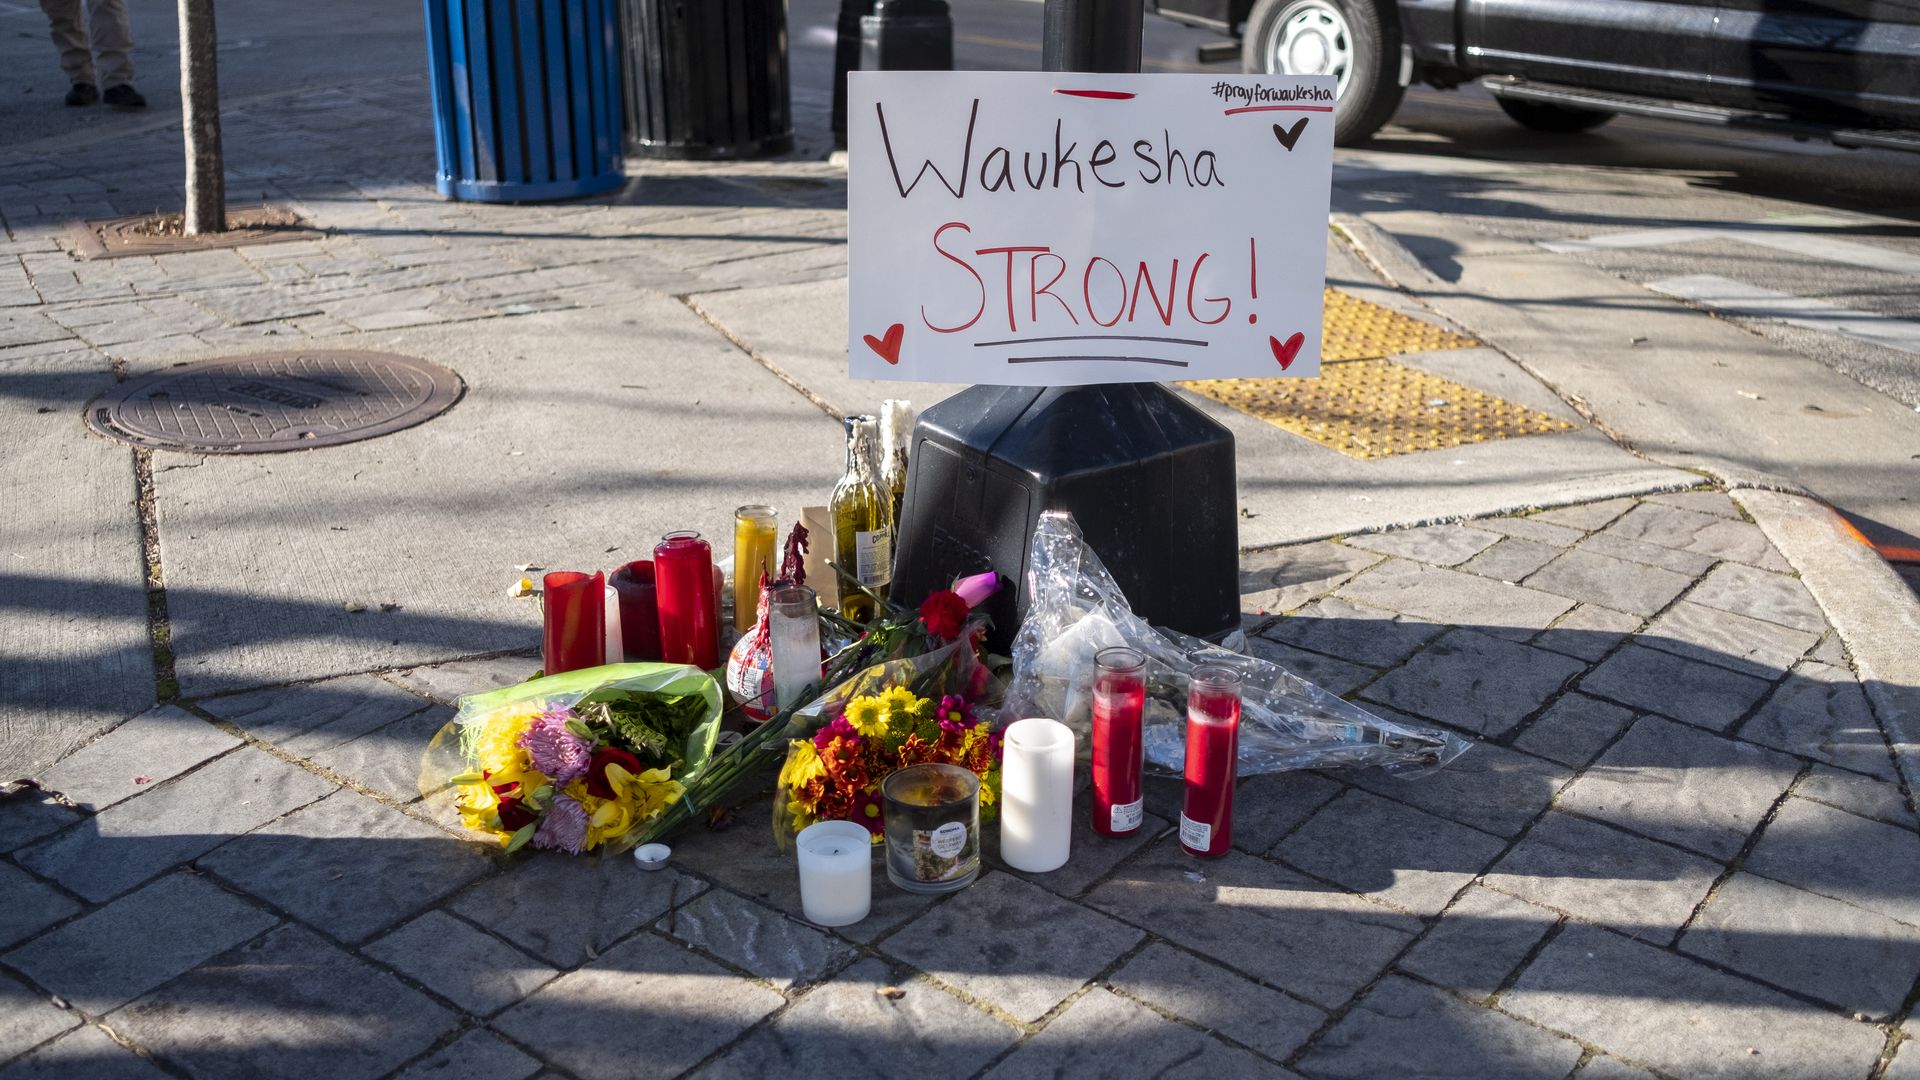 Wisconsin senators warn against attempts to exploit Waukesha tragedy - Axios